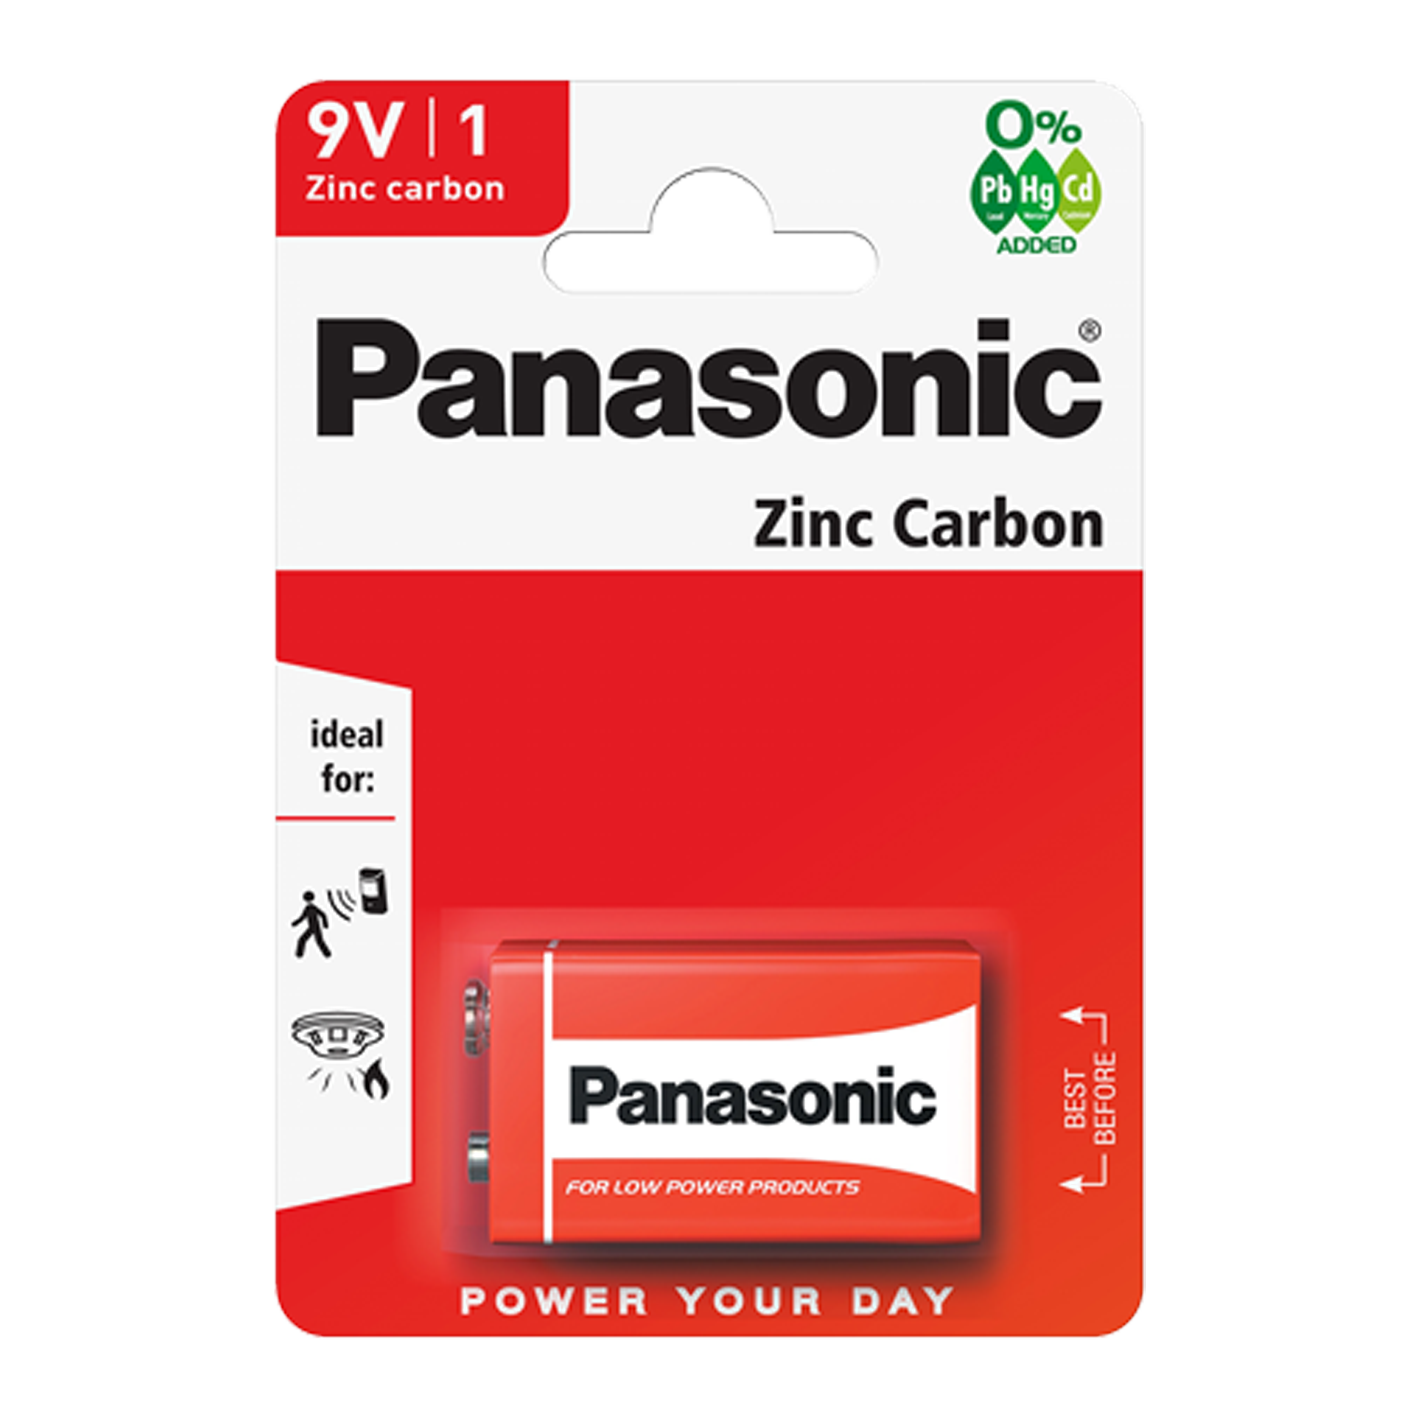 Panasonic 9V Zinc, paquete de 1